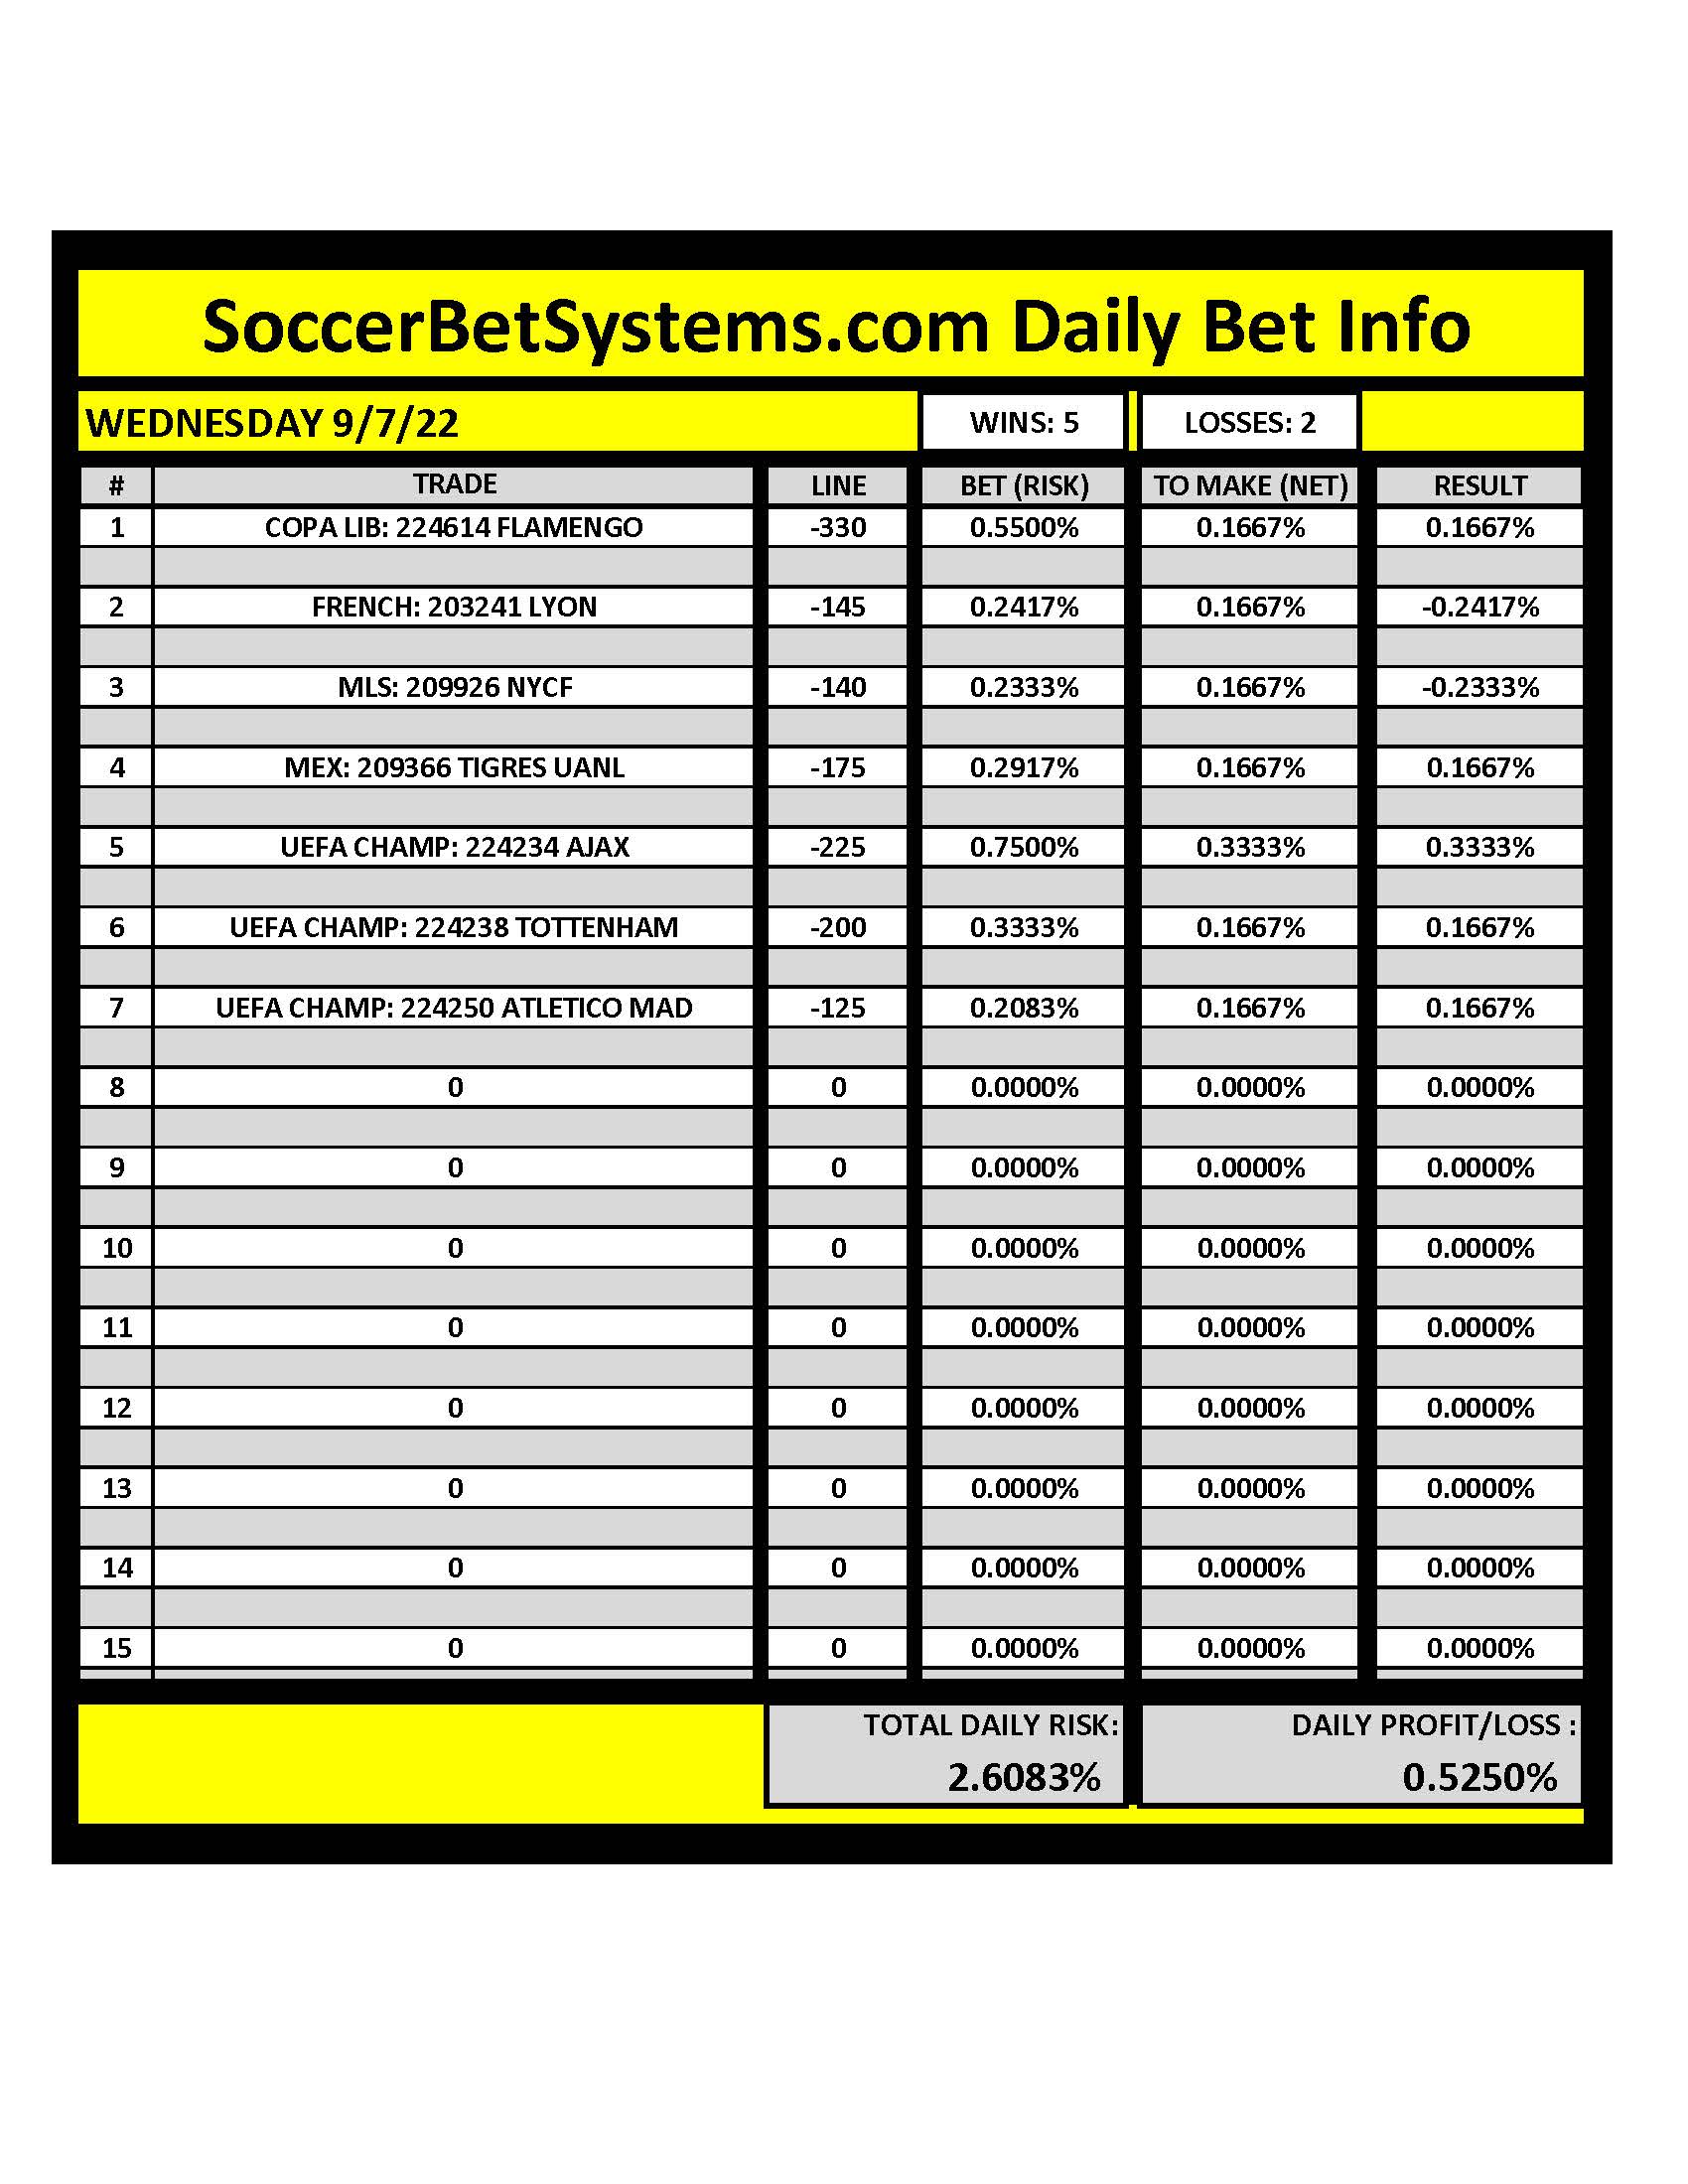 SoccerBetSystems.com 9/7/22 Daily Results